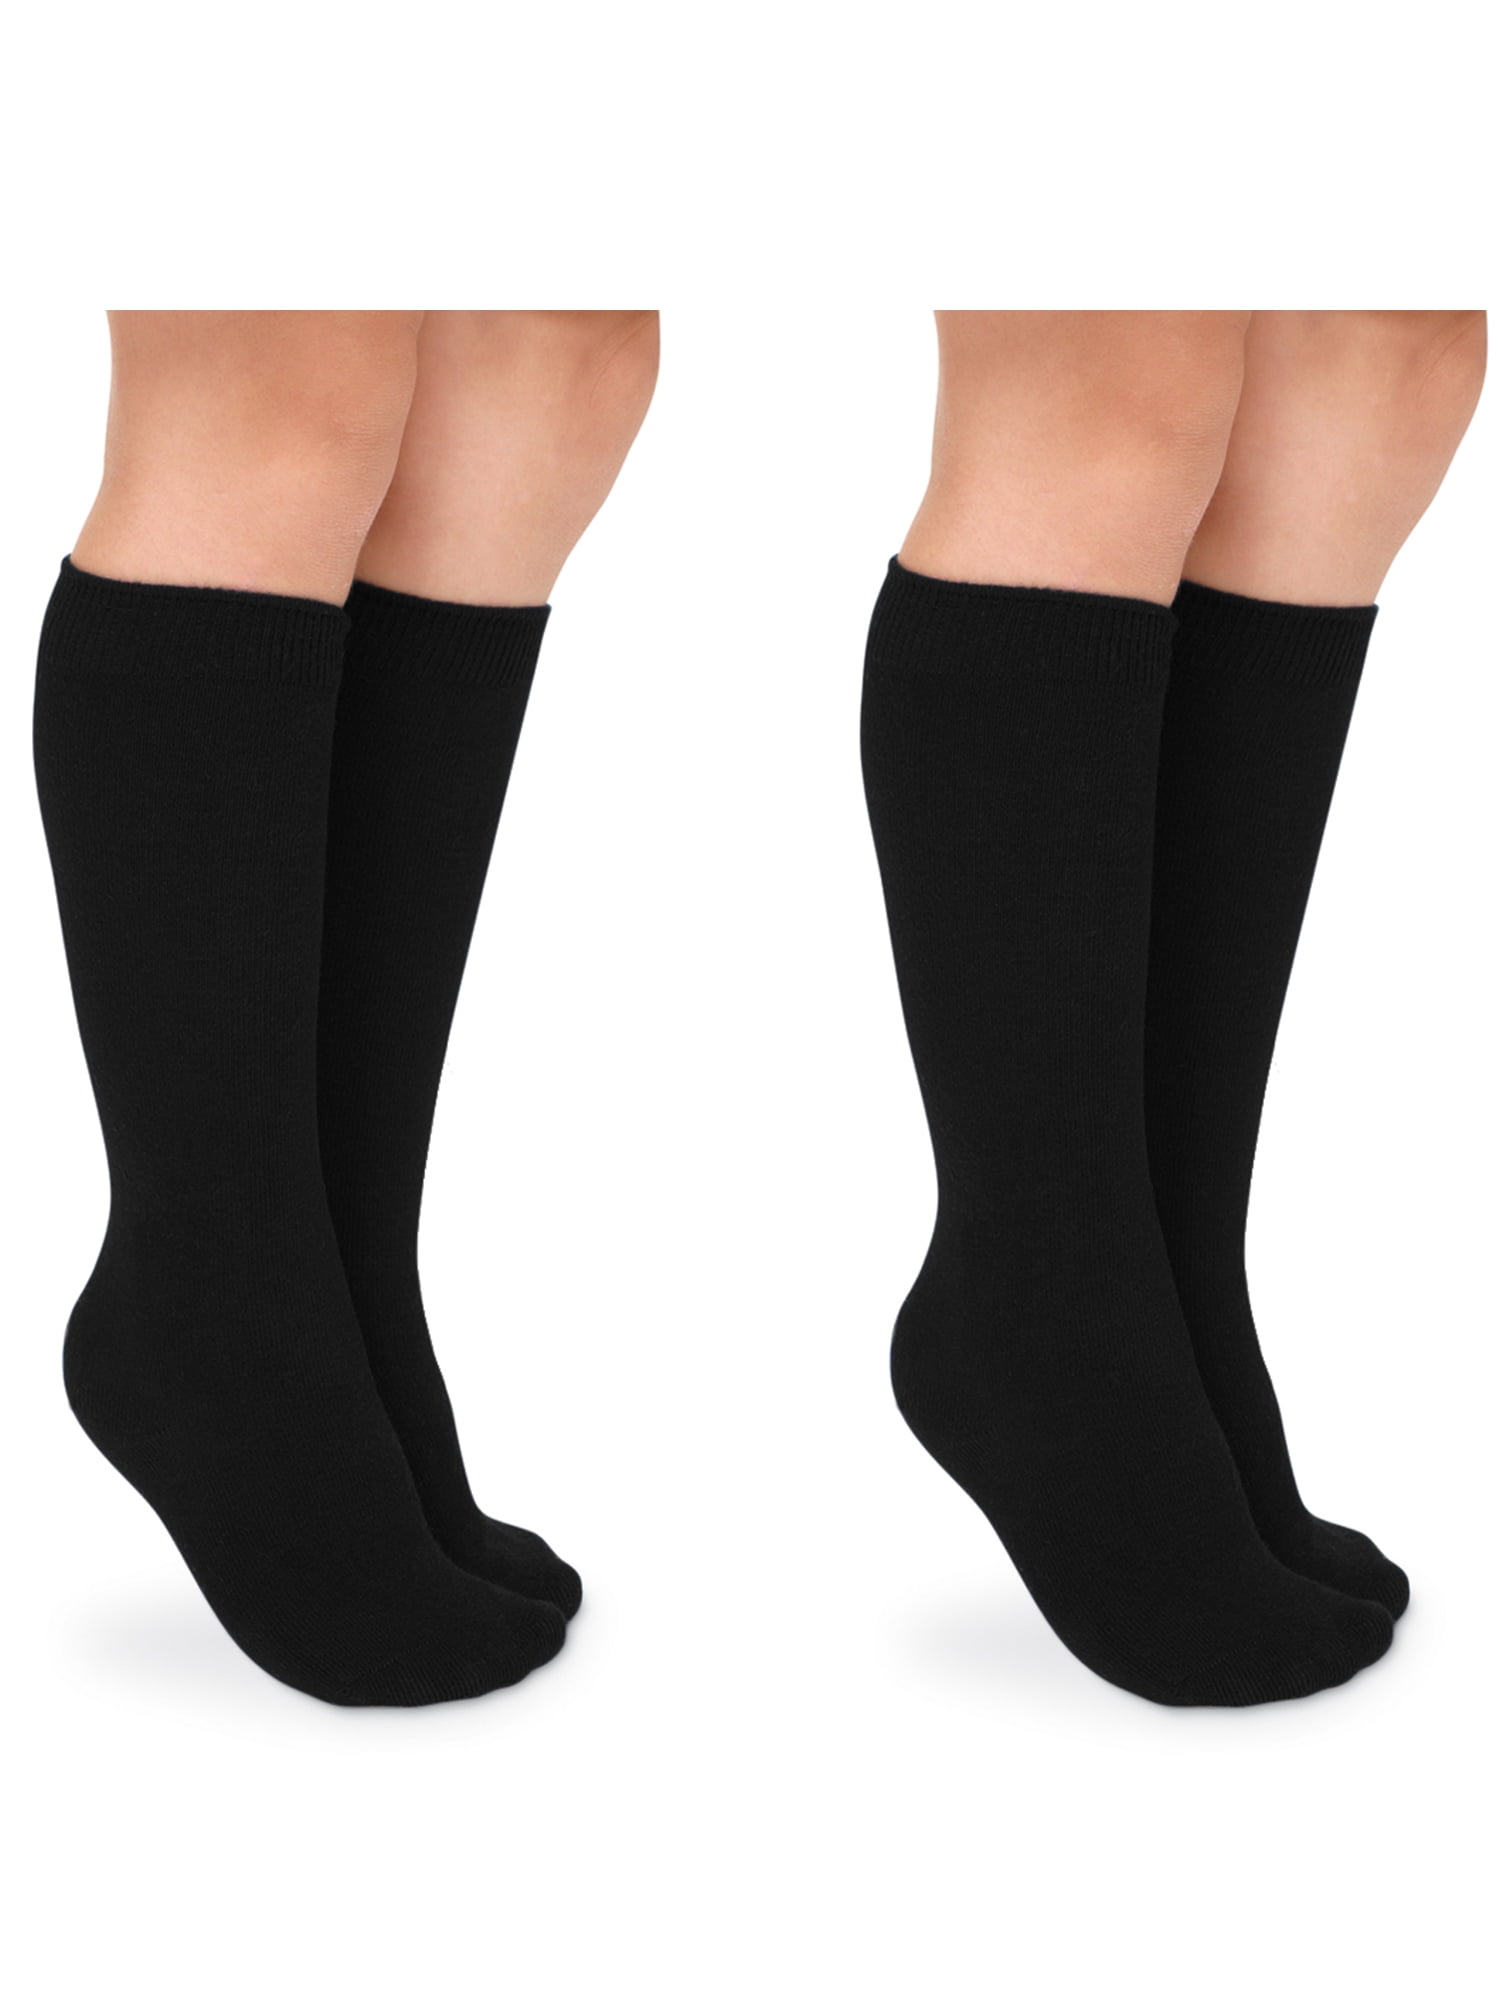 Girls/Kids 5/10 Socks Pairs Pack COTTON RICH EVERYDAY Casual School Design Black 